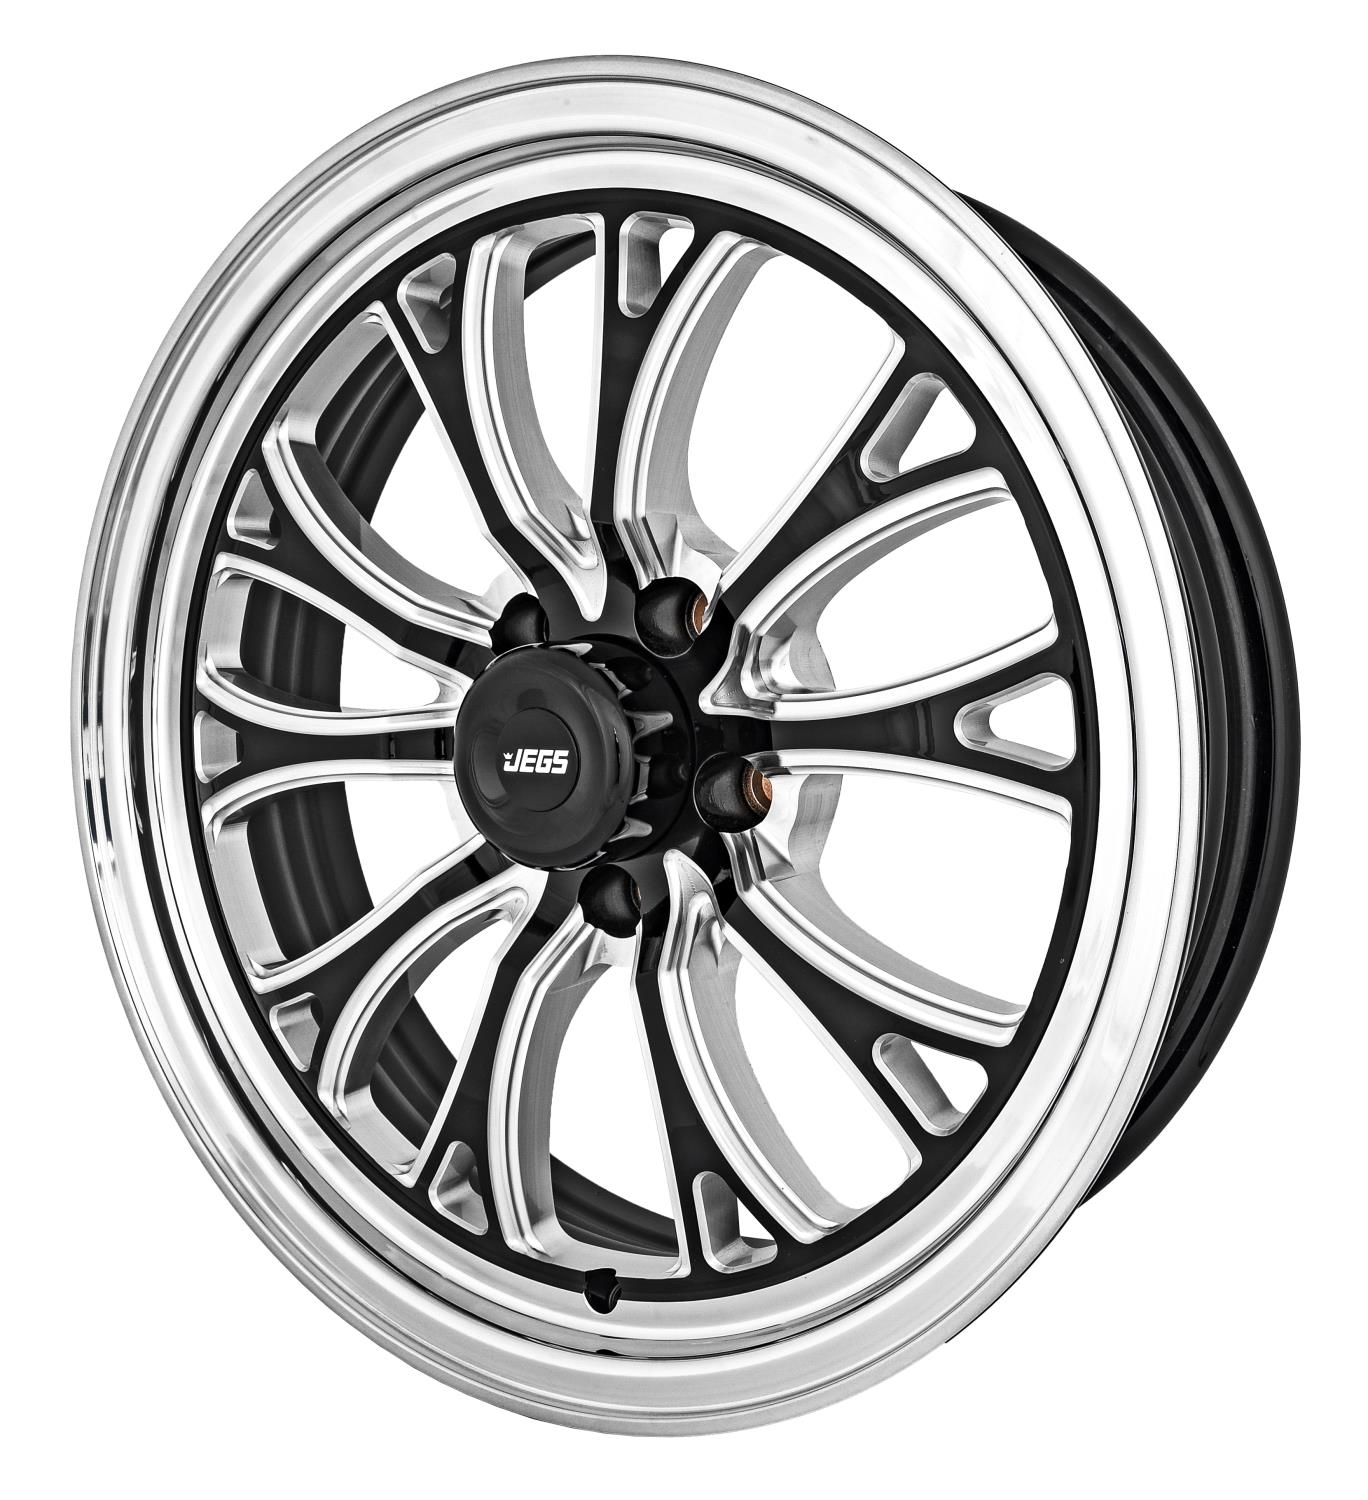 SSR Spike Wheel [Size: 17" x 4.5"] Polished Lip with Black Milled Spokes